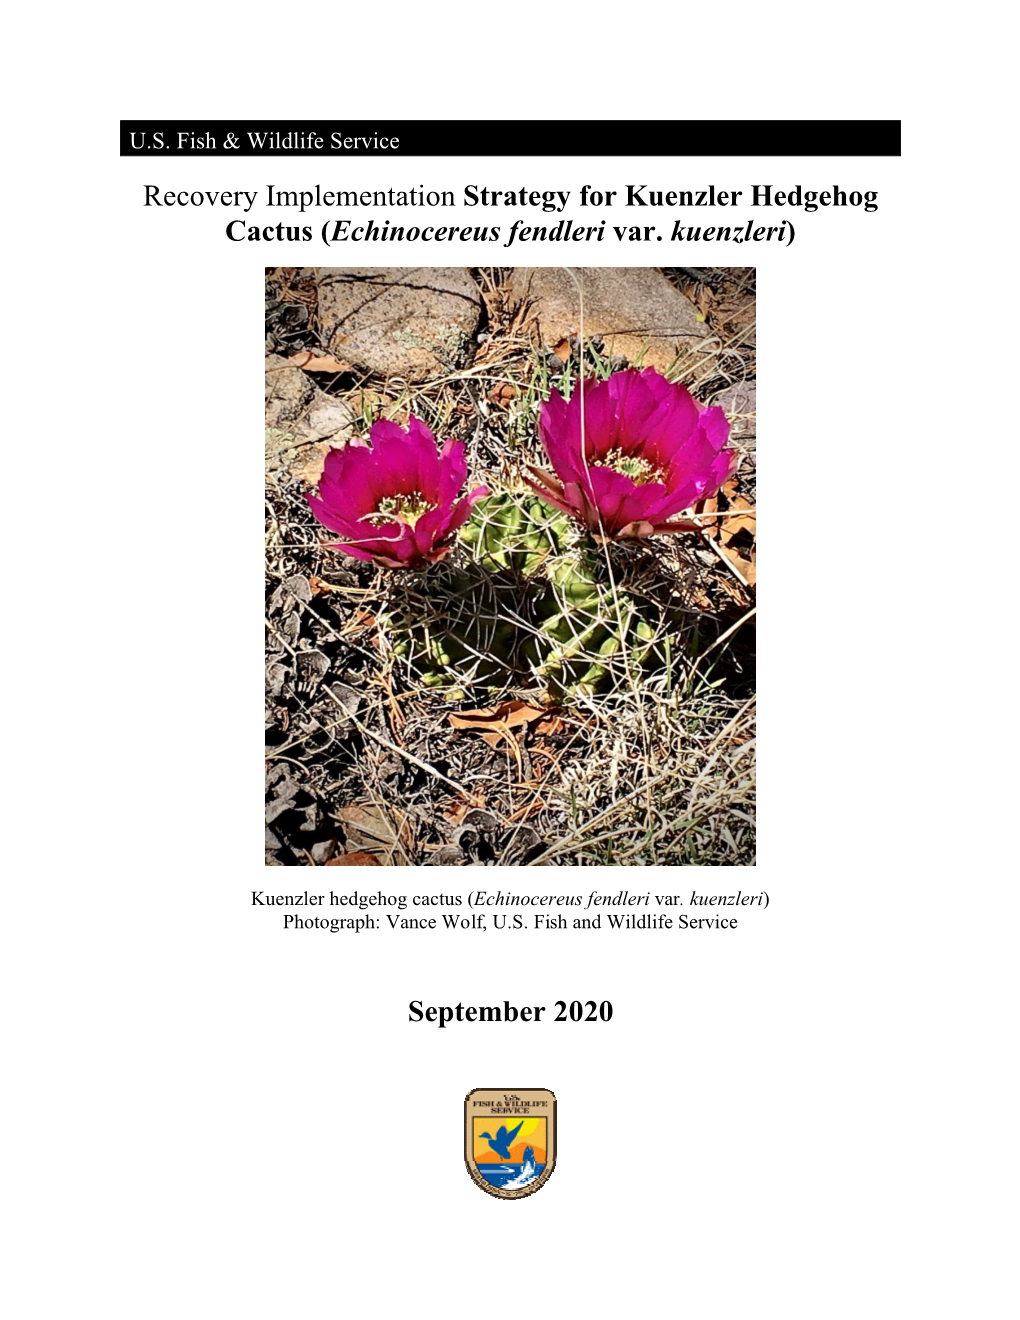 Recovery Implementation Strategy for Kuenzler Hedgehog Cactus (Echinocereus Fendleri Var